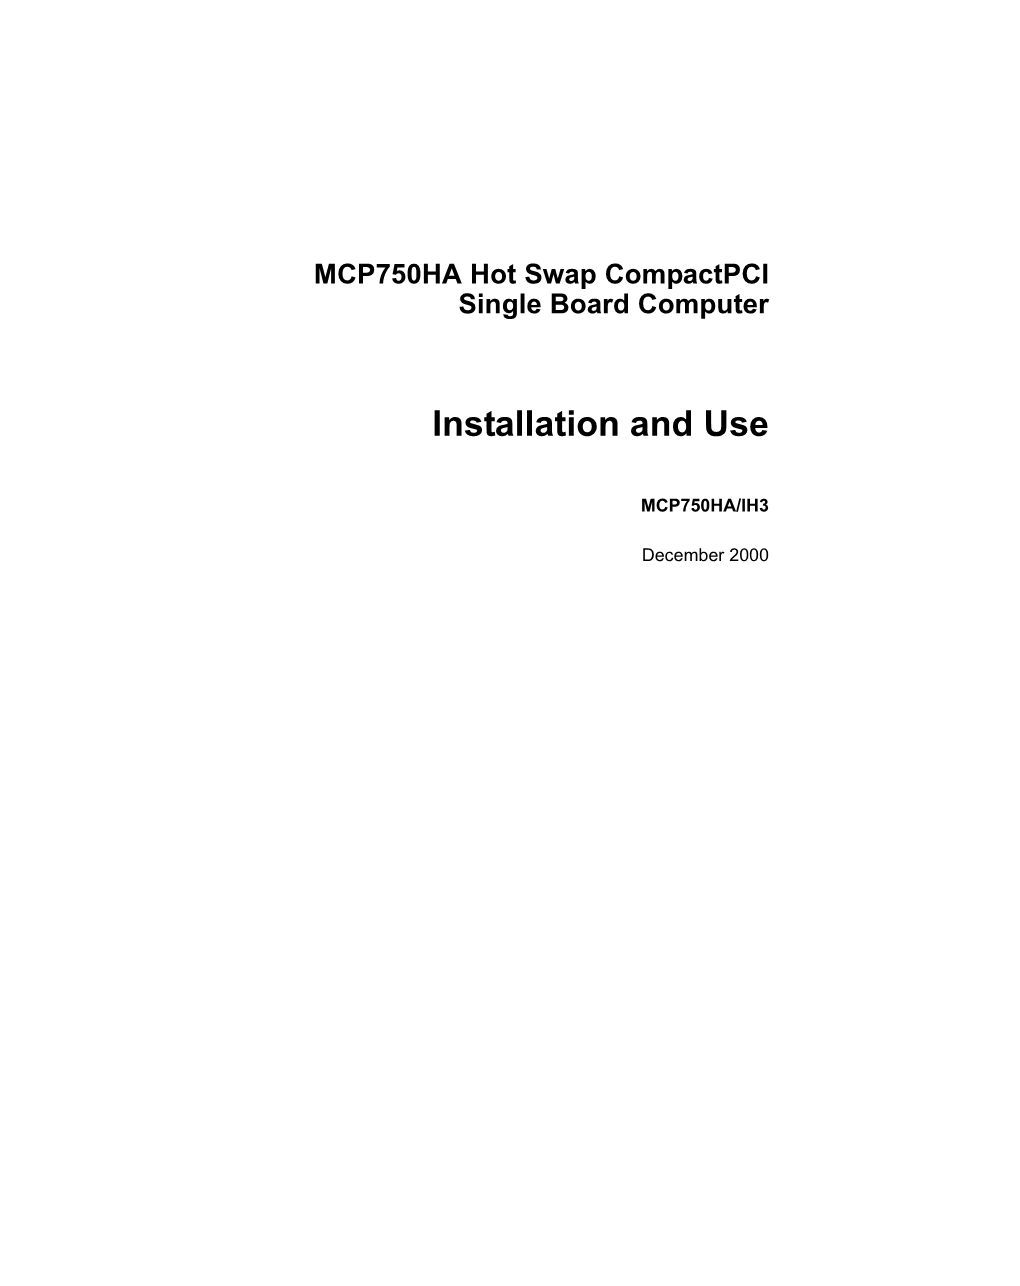 MCP750HA Compactpci Single Board Computer Installation And